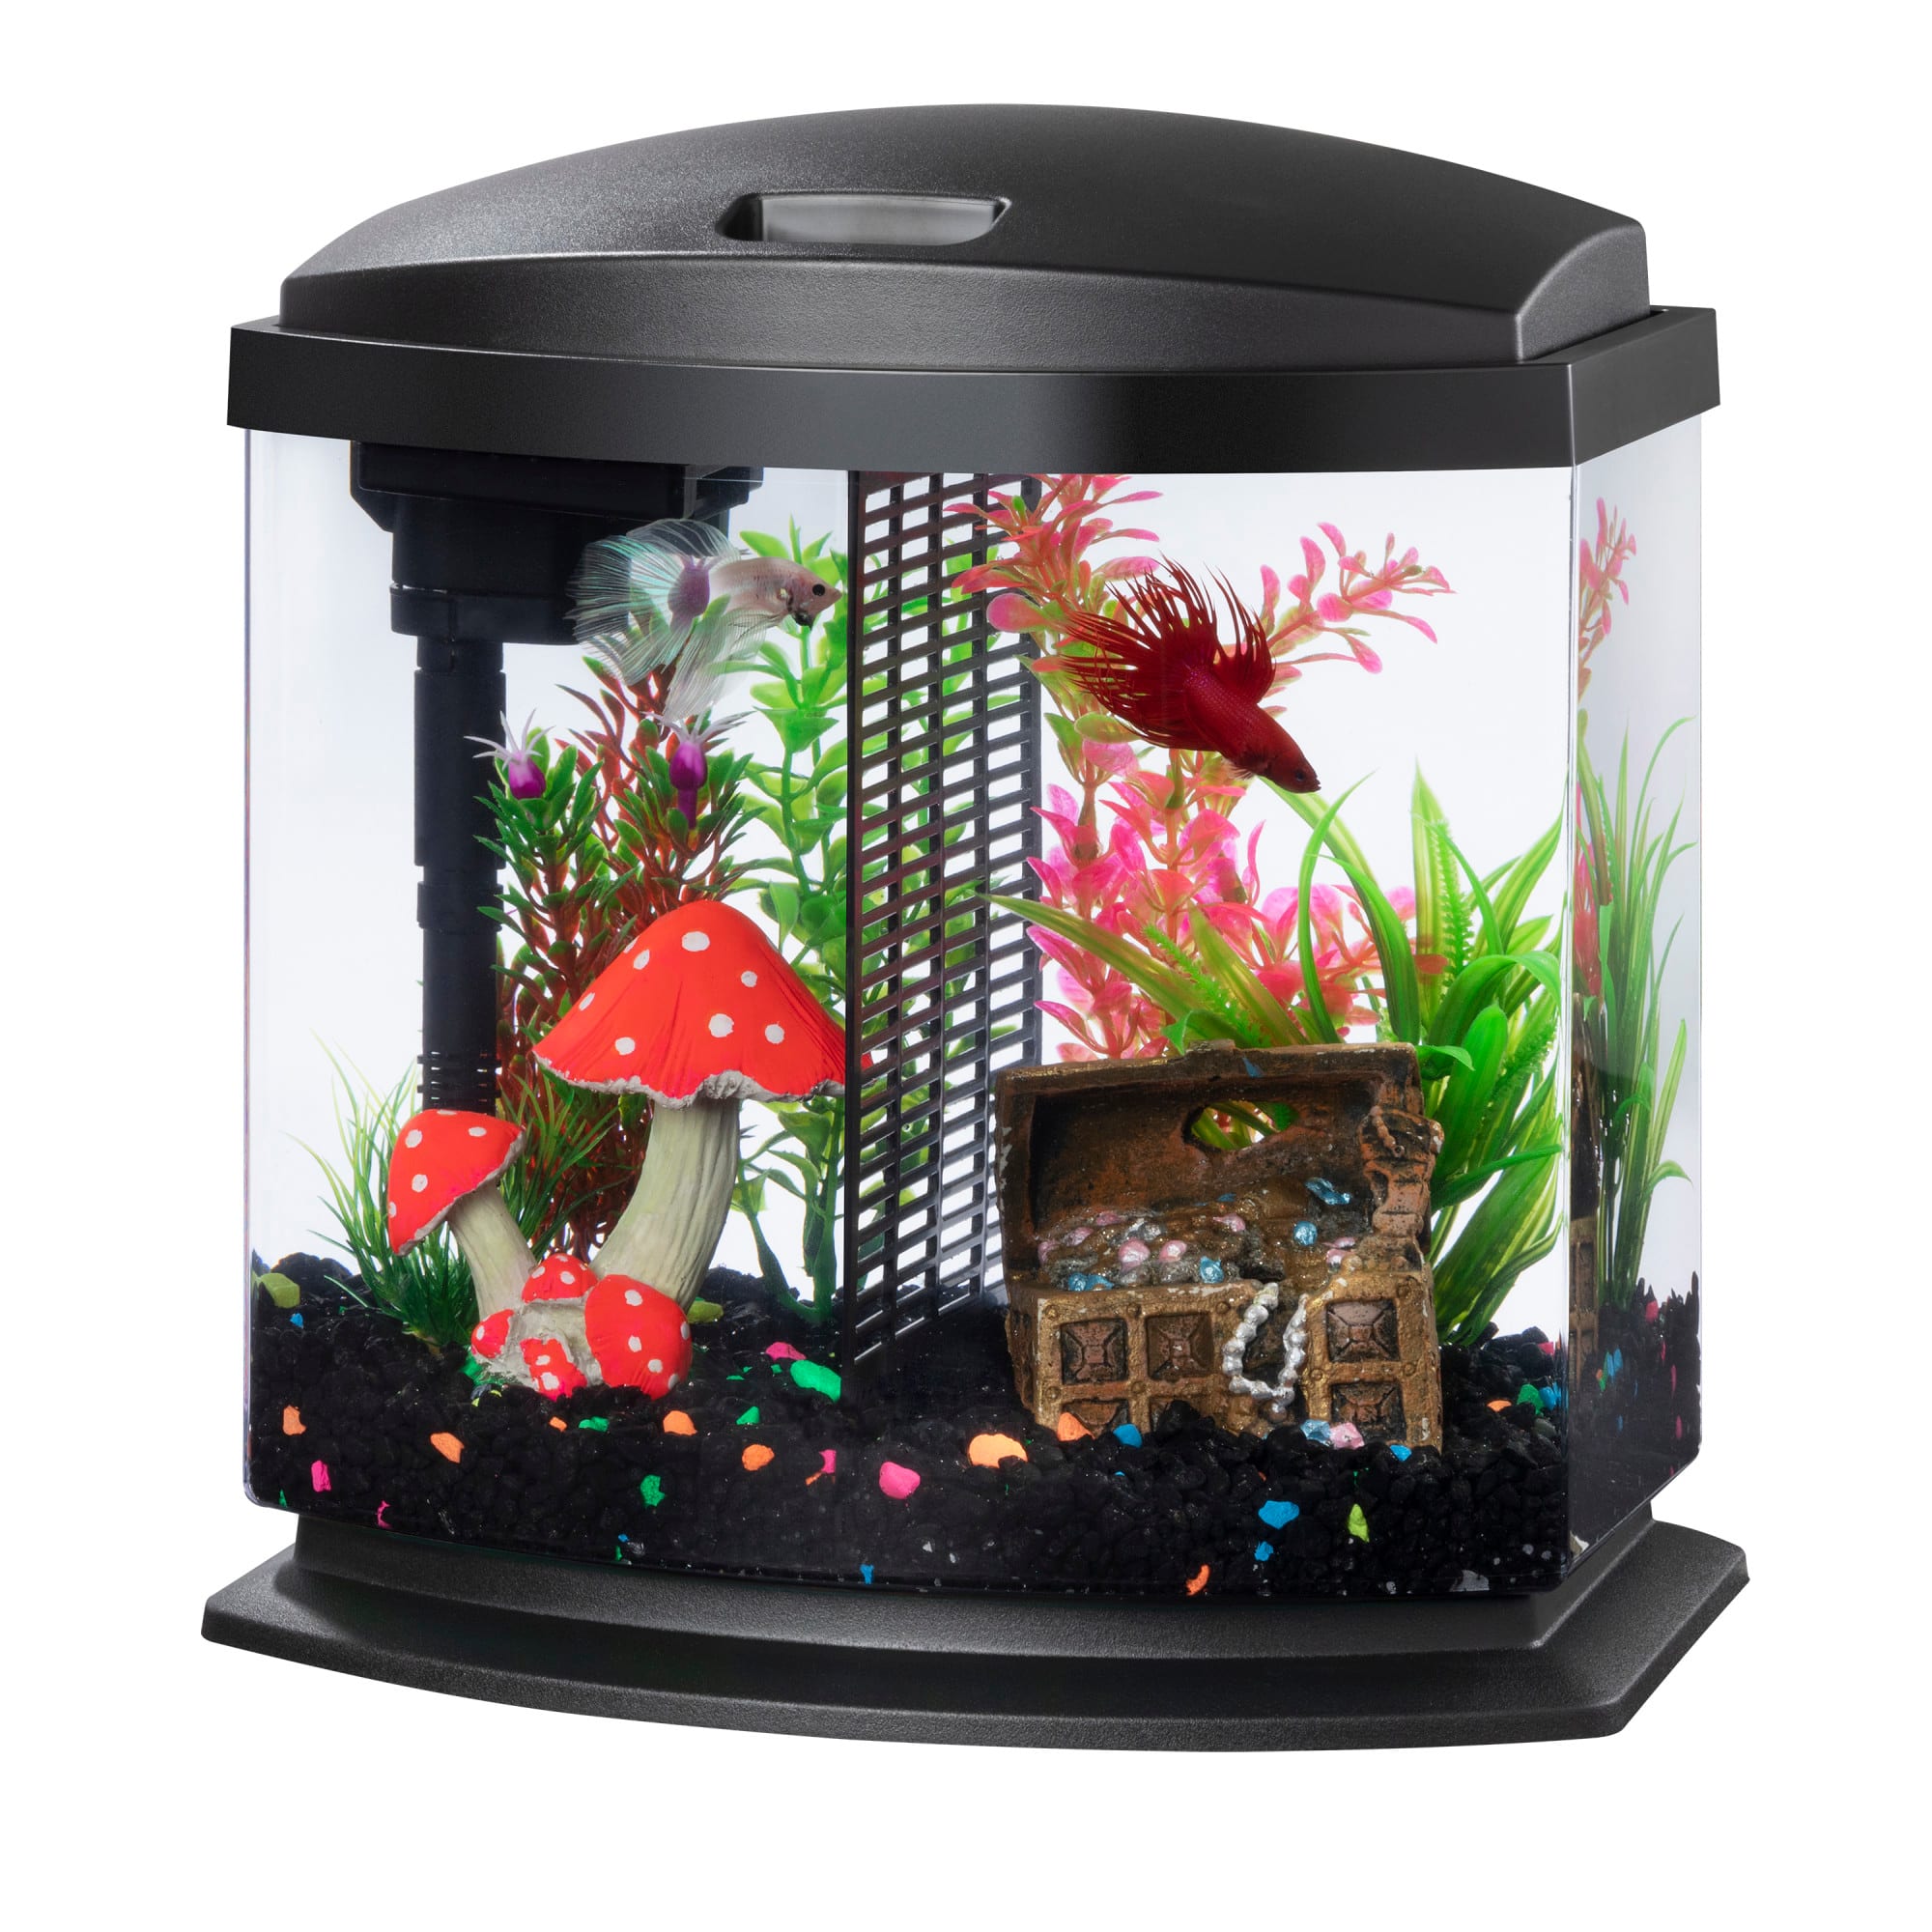 GloFish 2.5 Gallon Corner Aquarium Kit, Includes LED Lighting and Filtration Perfect for GloFish Betta Fish Tank, Size: 2.5 Gallons